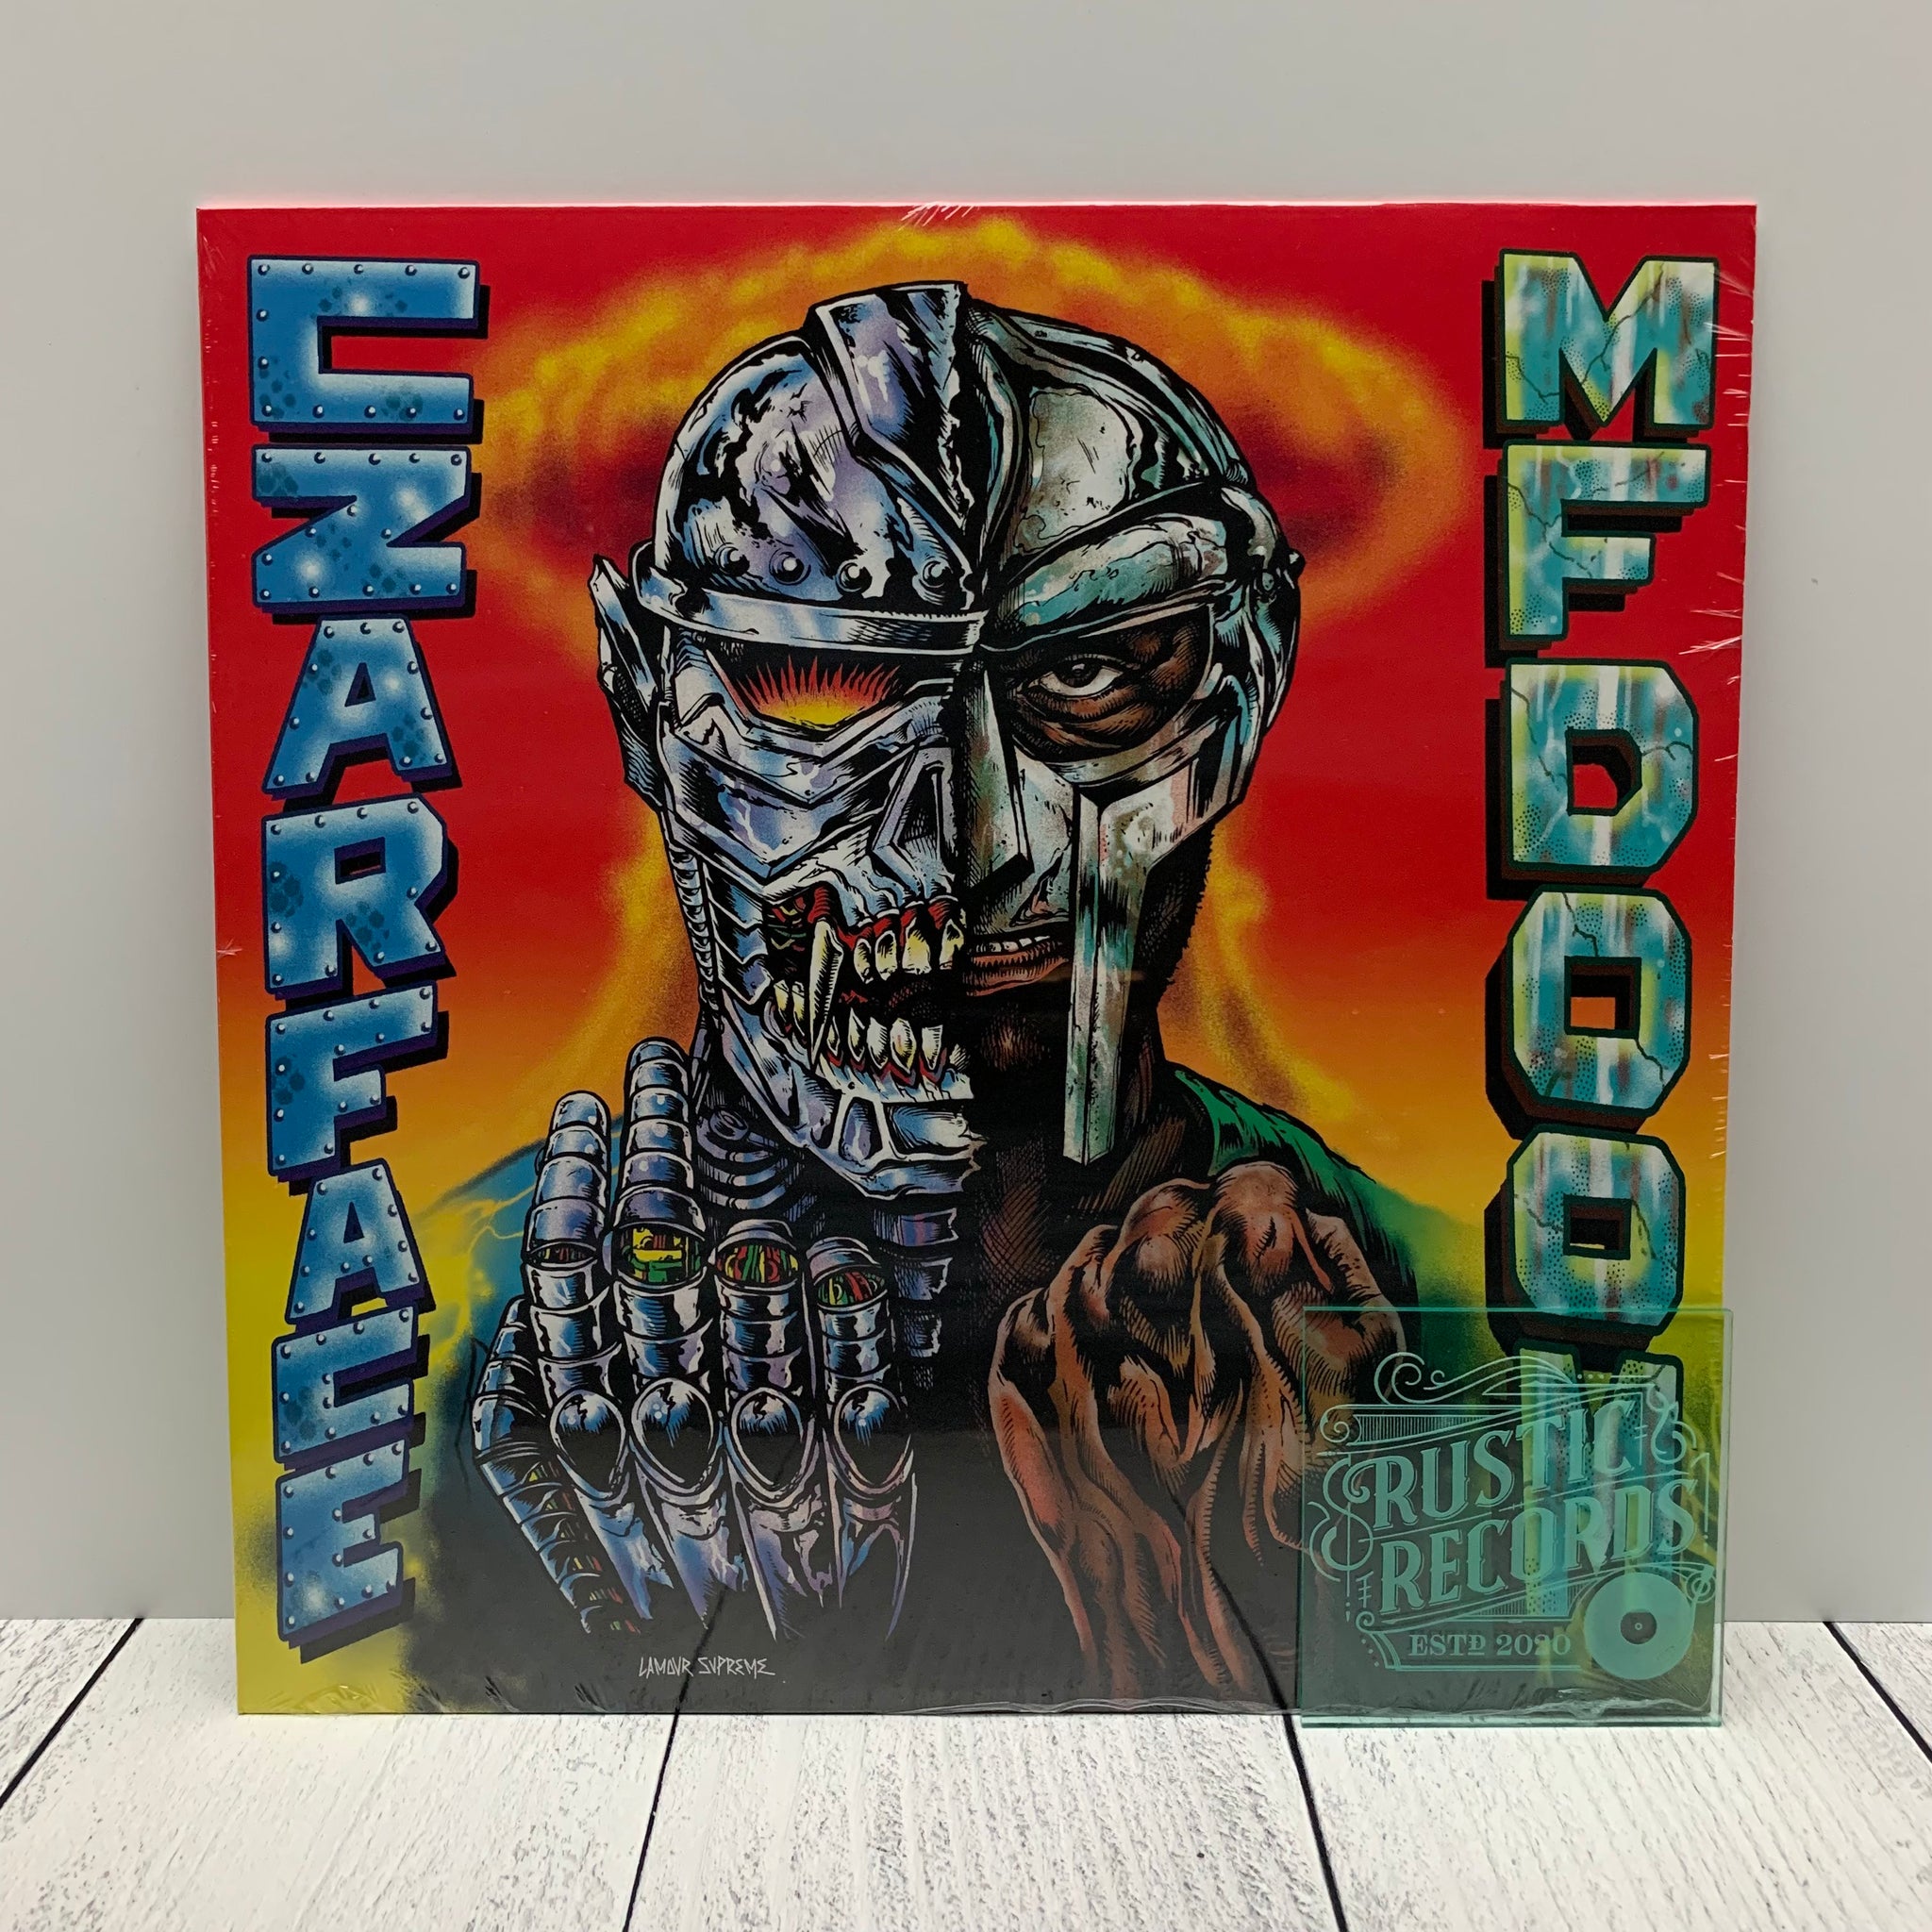 Czarface & MF DOOM - Czarface Meets Metalface